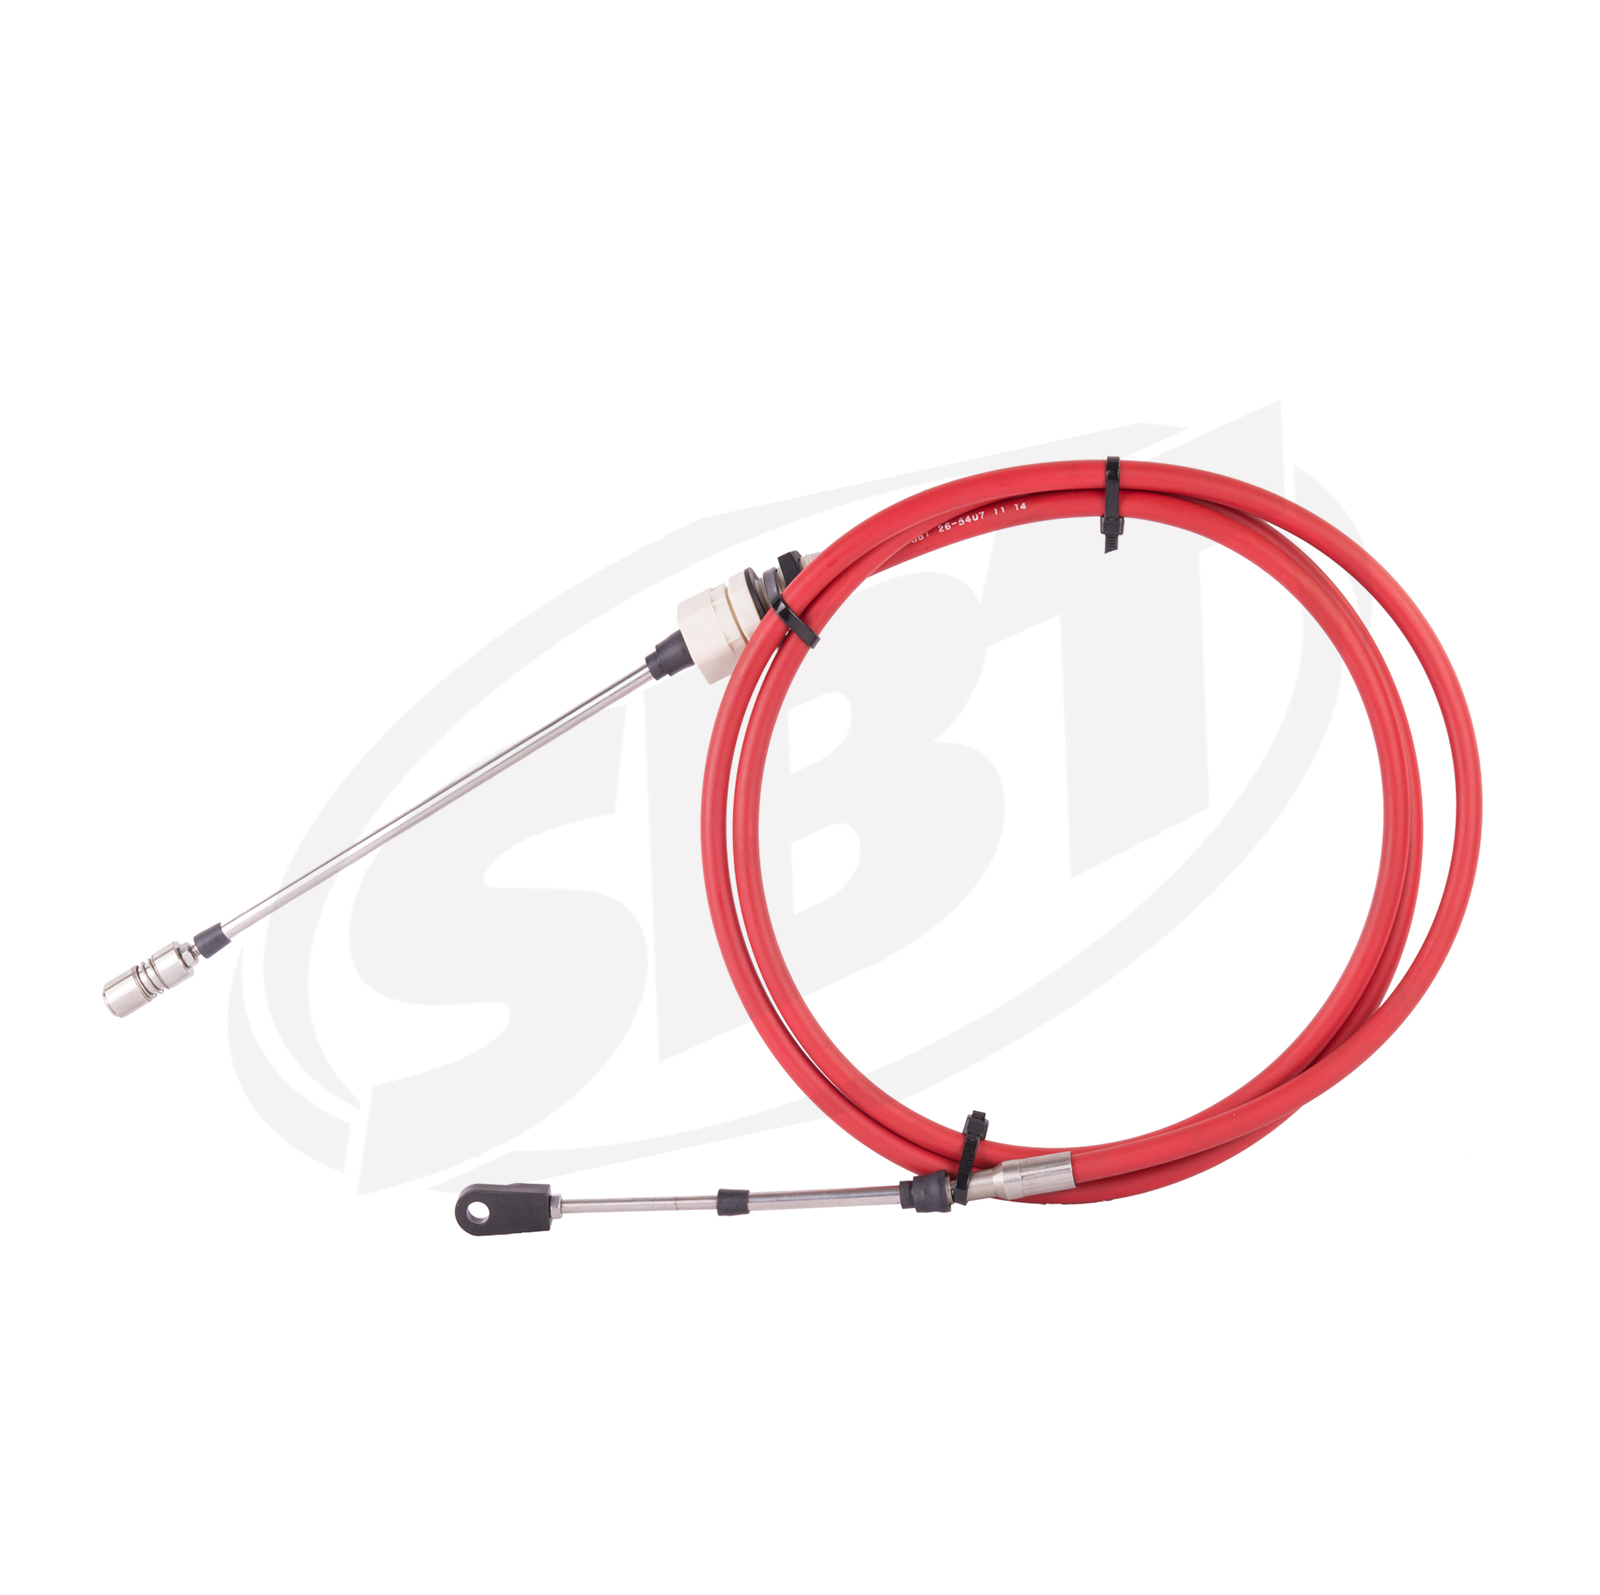 Trim Cable Compatible with Yamaha XL800 F0D-U153E-00-00 F0D-U153E-10-00 6153E-19